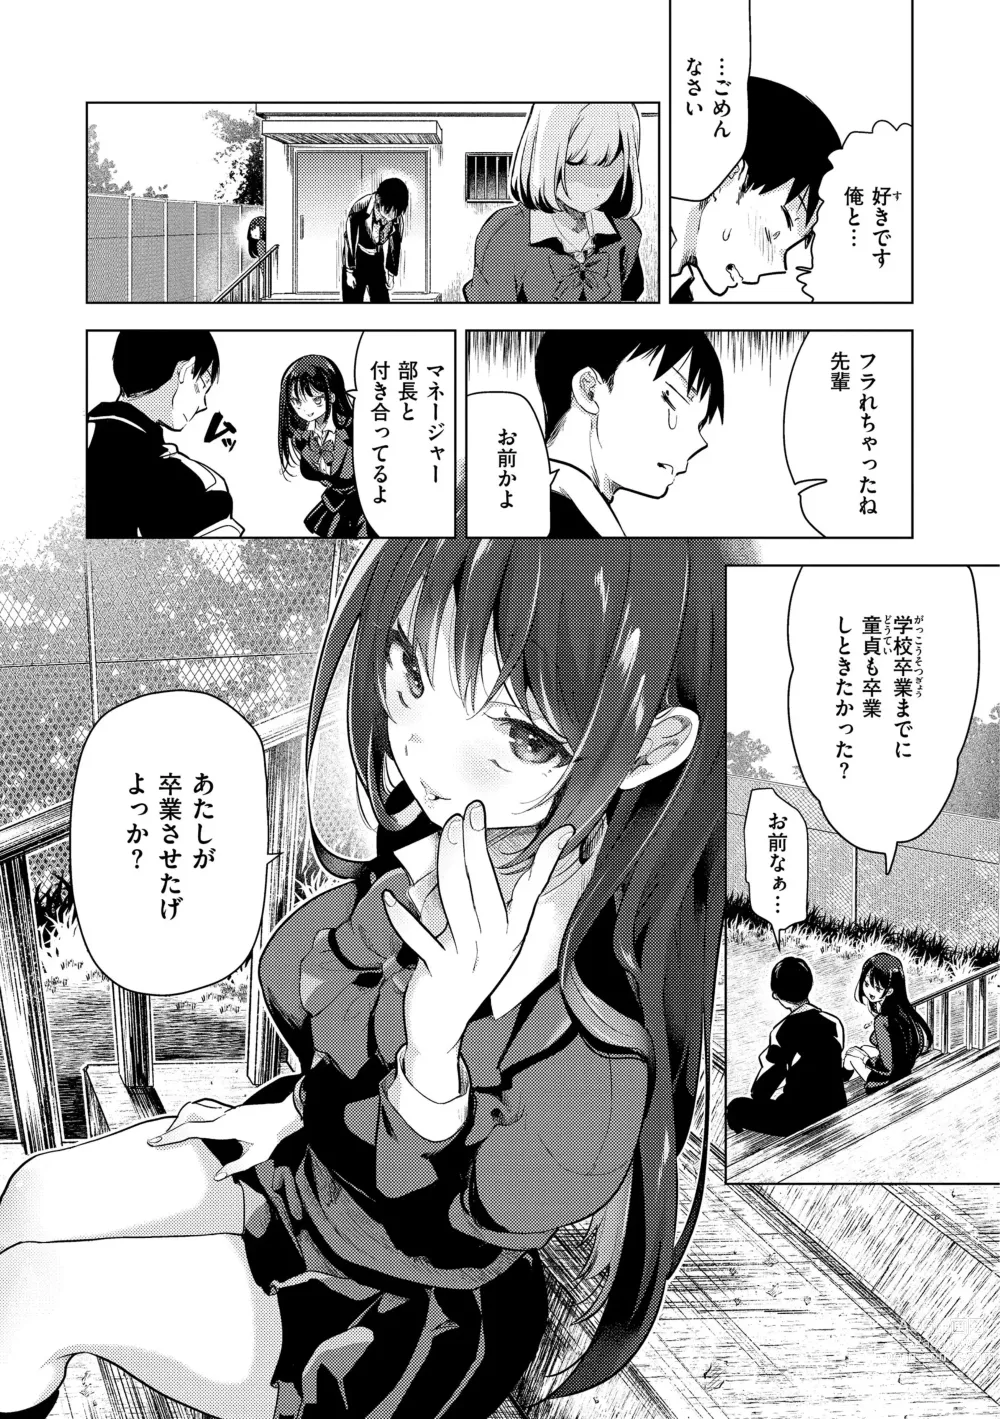 Page 3 of manga Koishite Furete - Loving and Touching